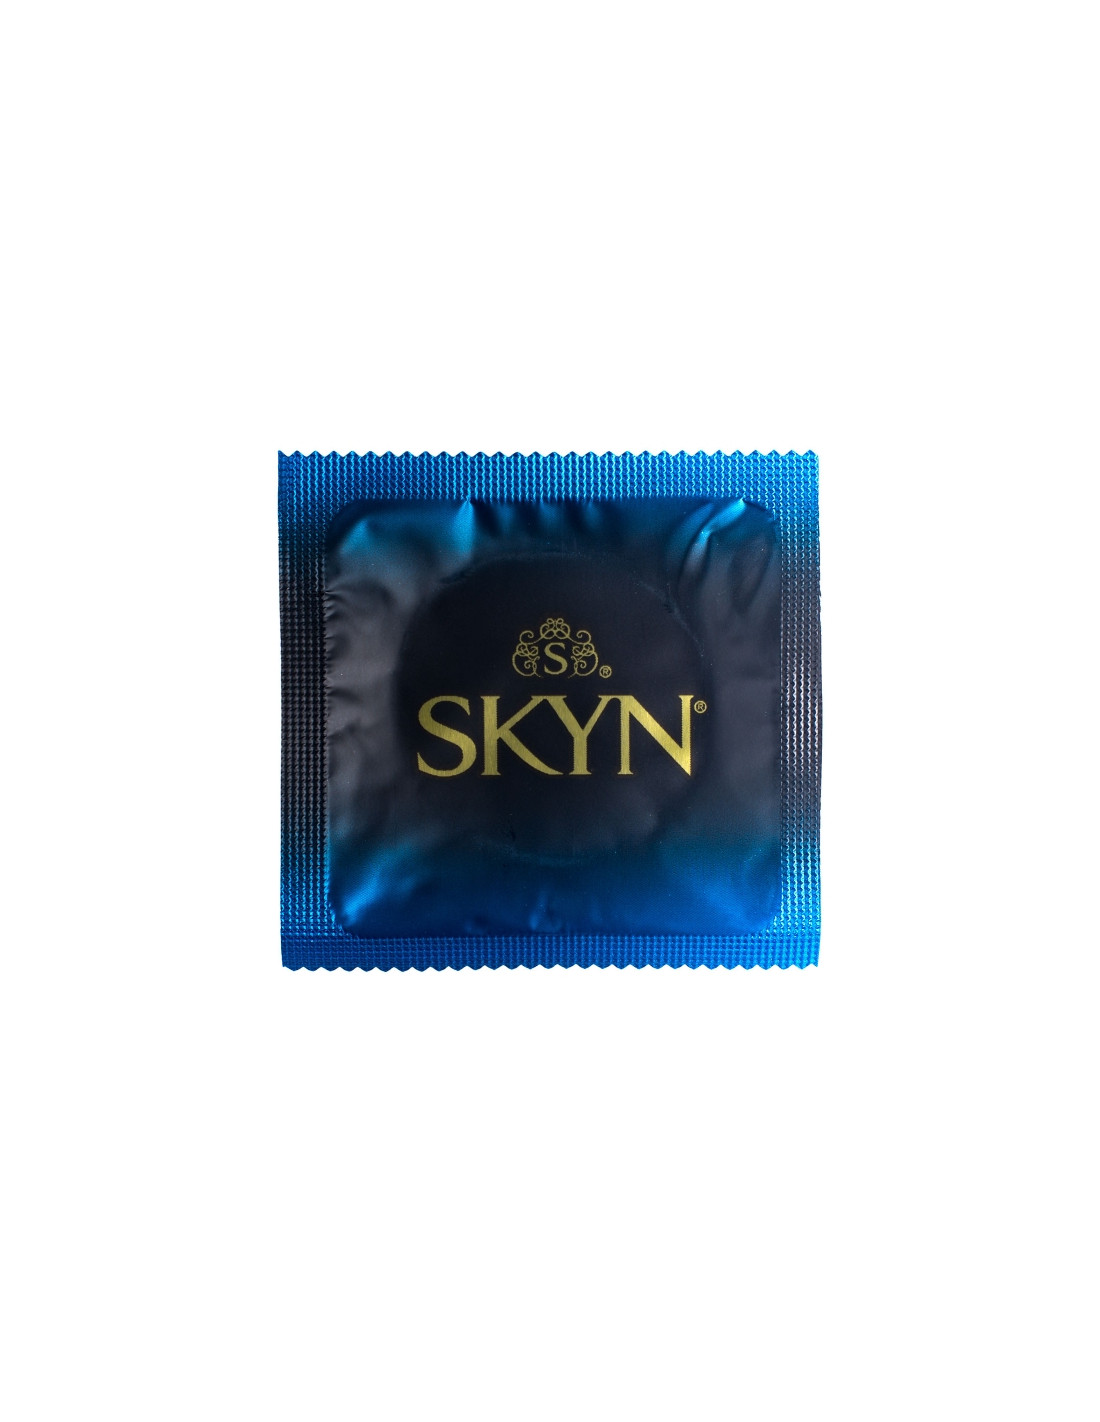 Manix Preservatifs sans latex extra lubrifie ltcTh1FJ